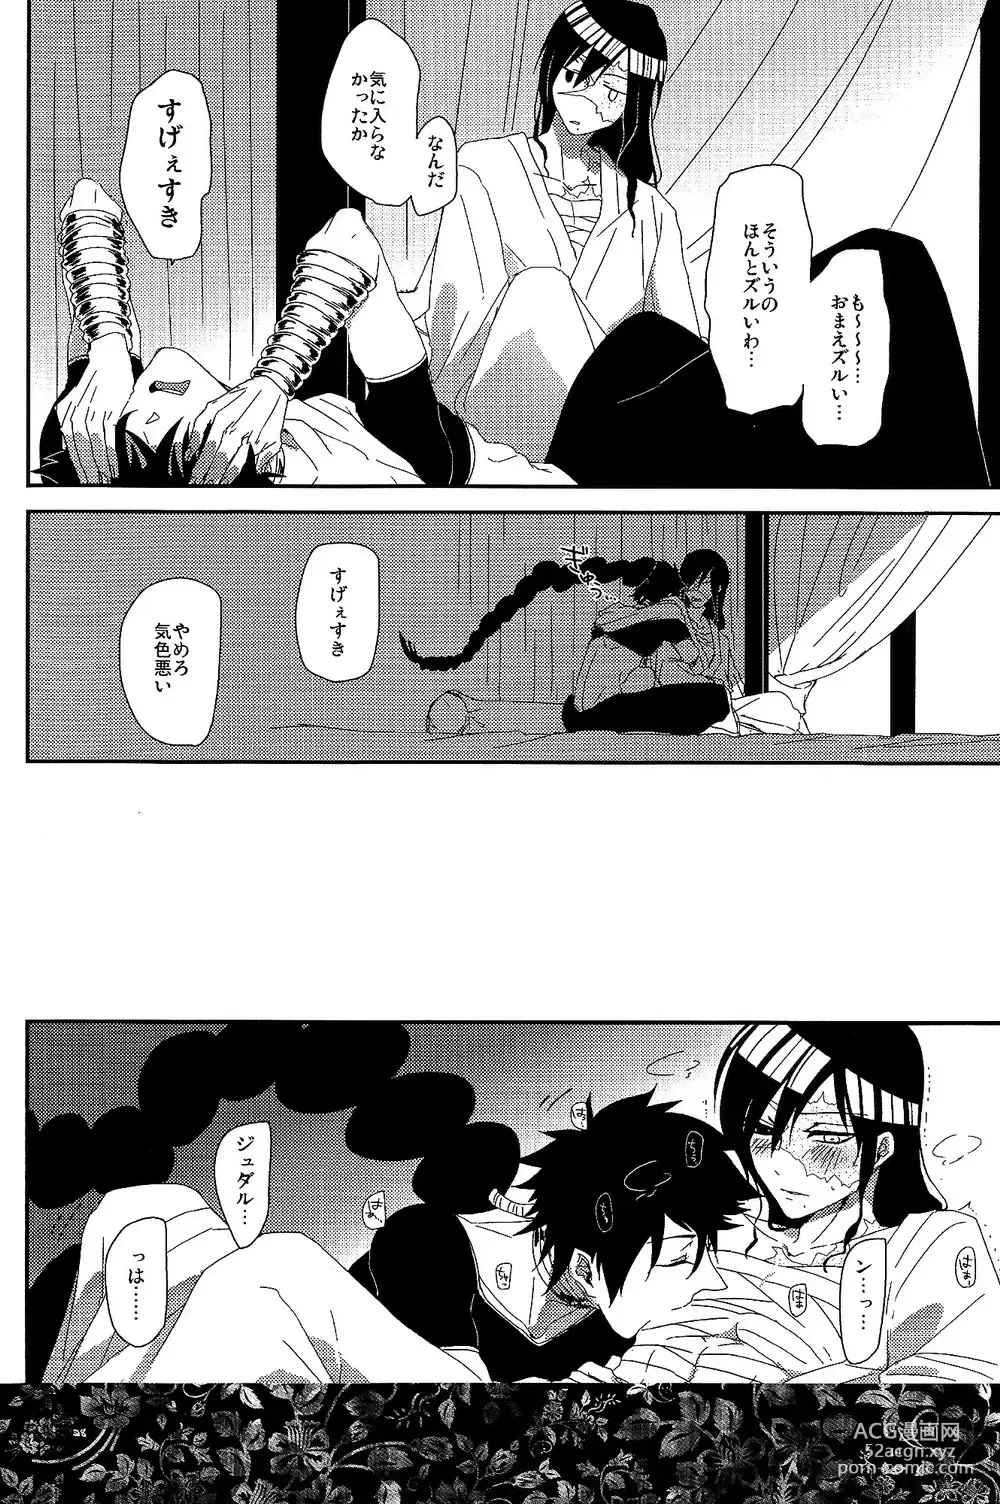 Page 13 of doujinshi GOLDEN ERROR